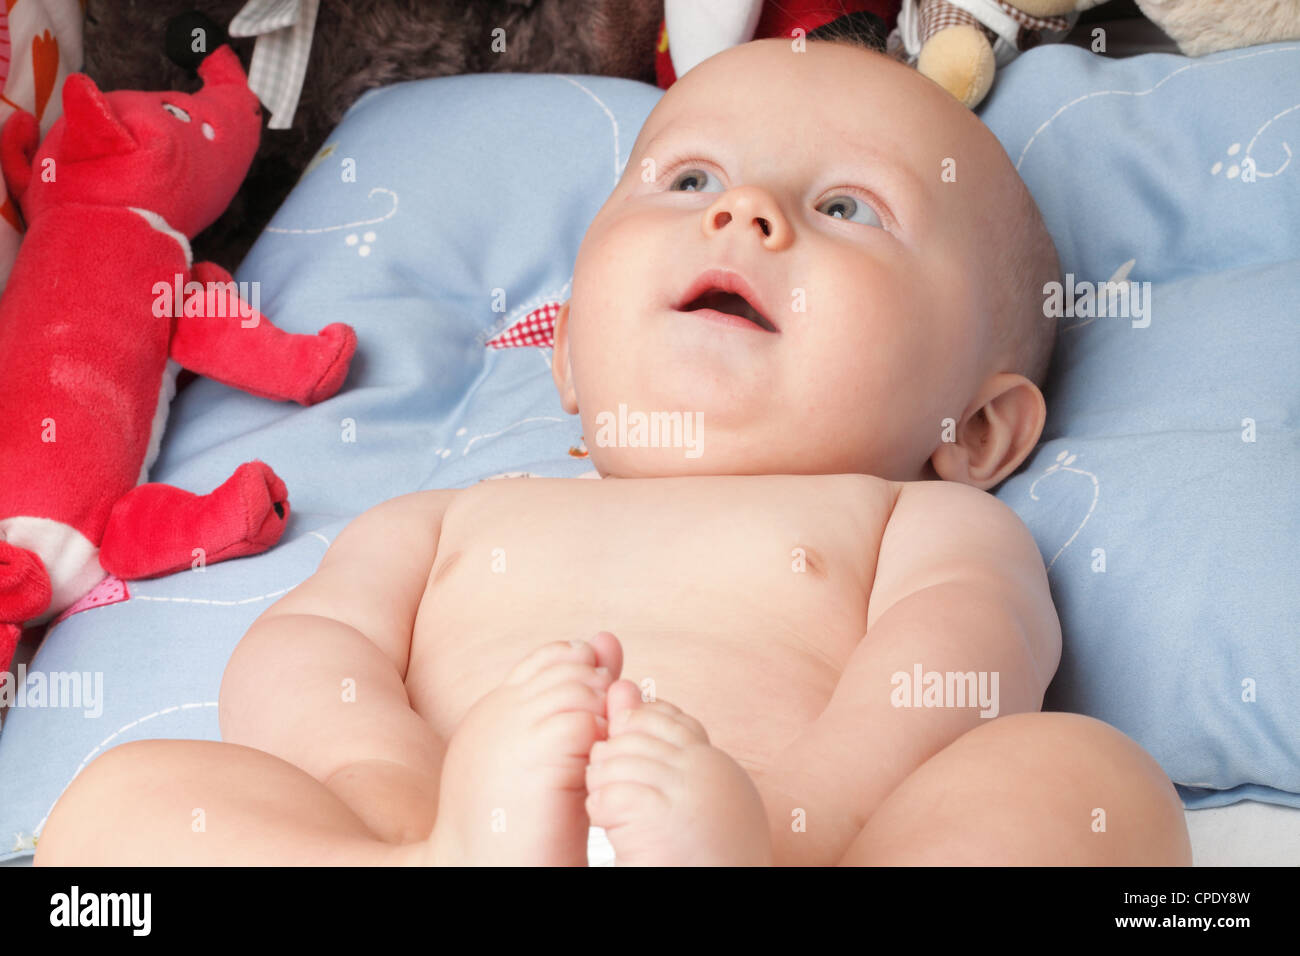 Baby Boy en pañal en blanco, ojo azul Foto de stock